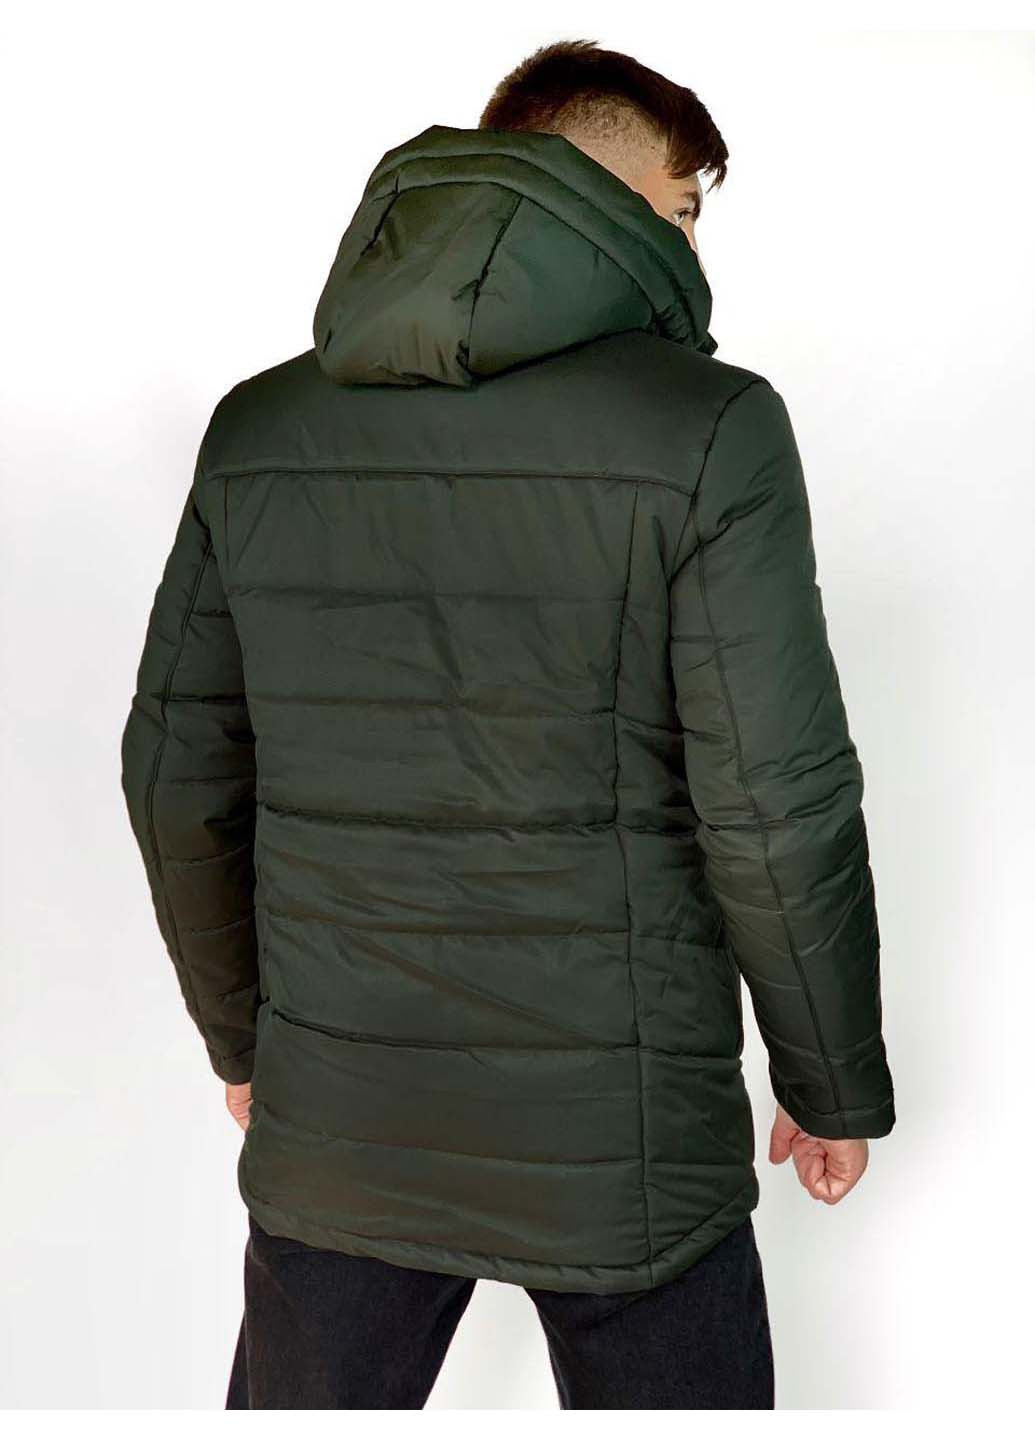 Оливковая (хаки) зимняя куртка Intruder